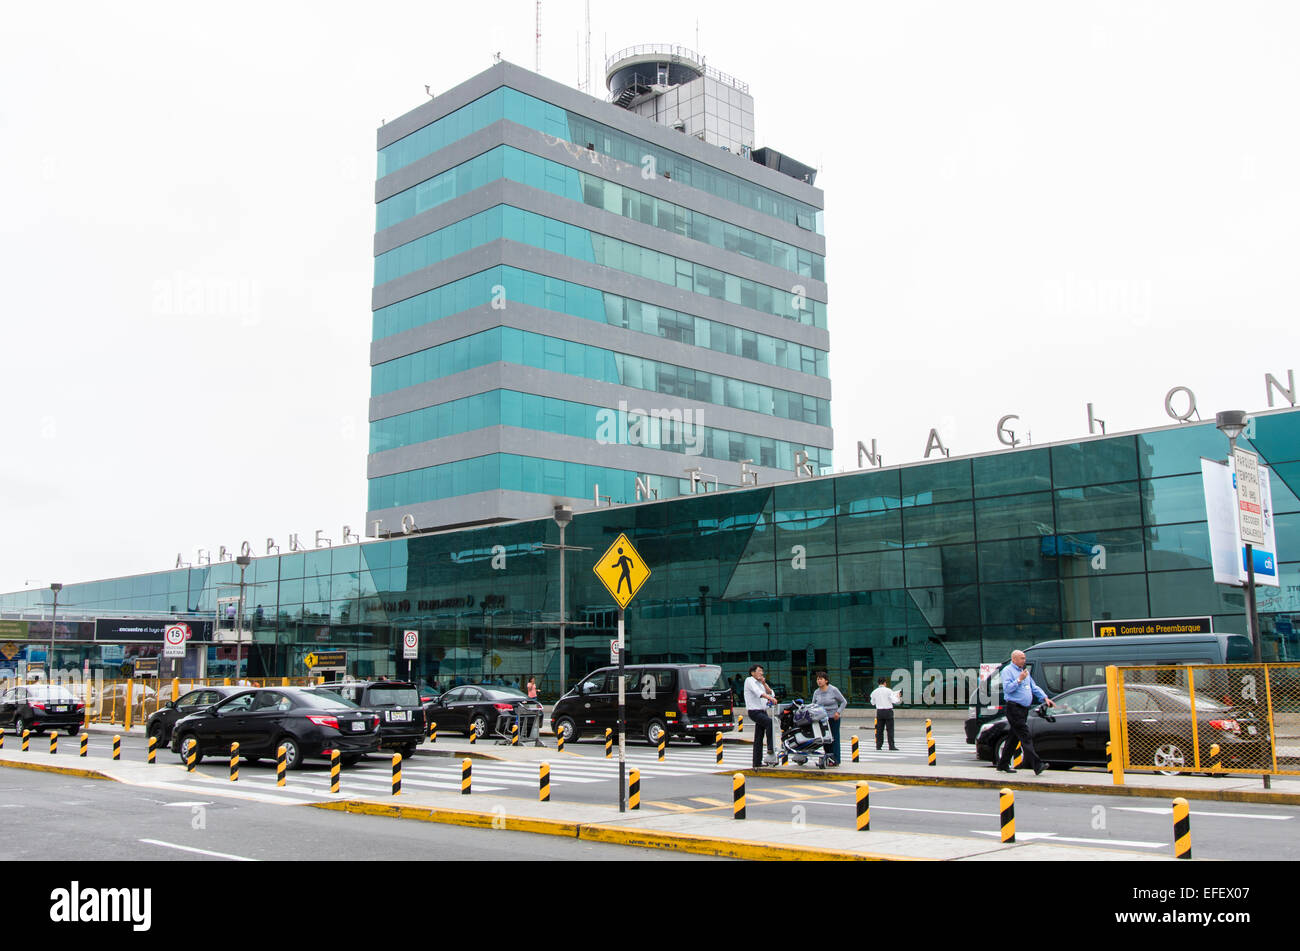 International airport Jorge Chávez in Lima .Peru. Stock Photo